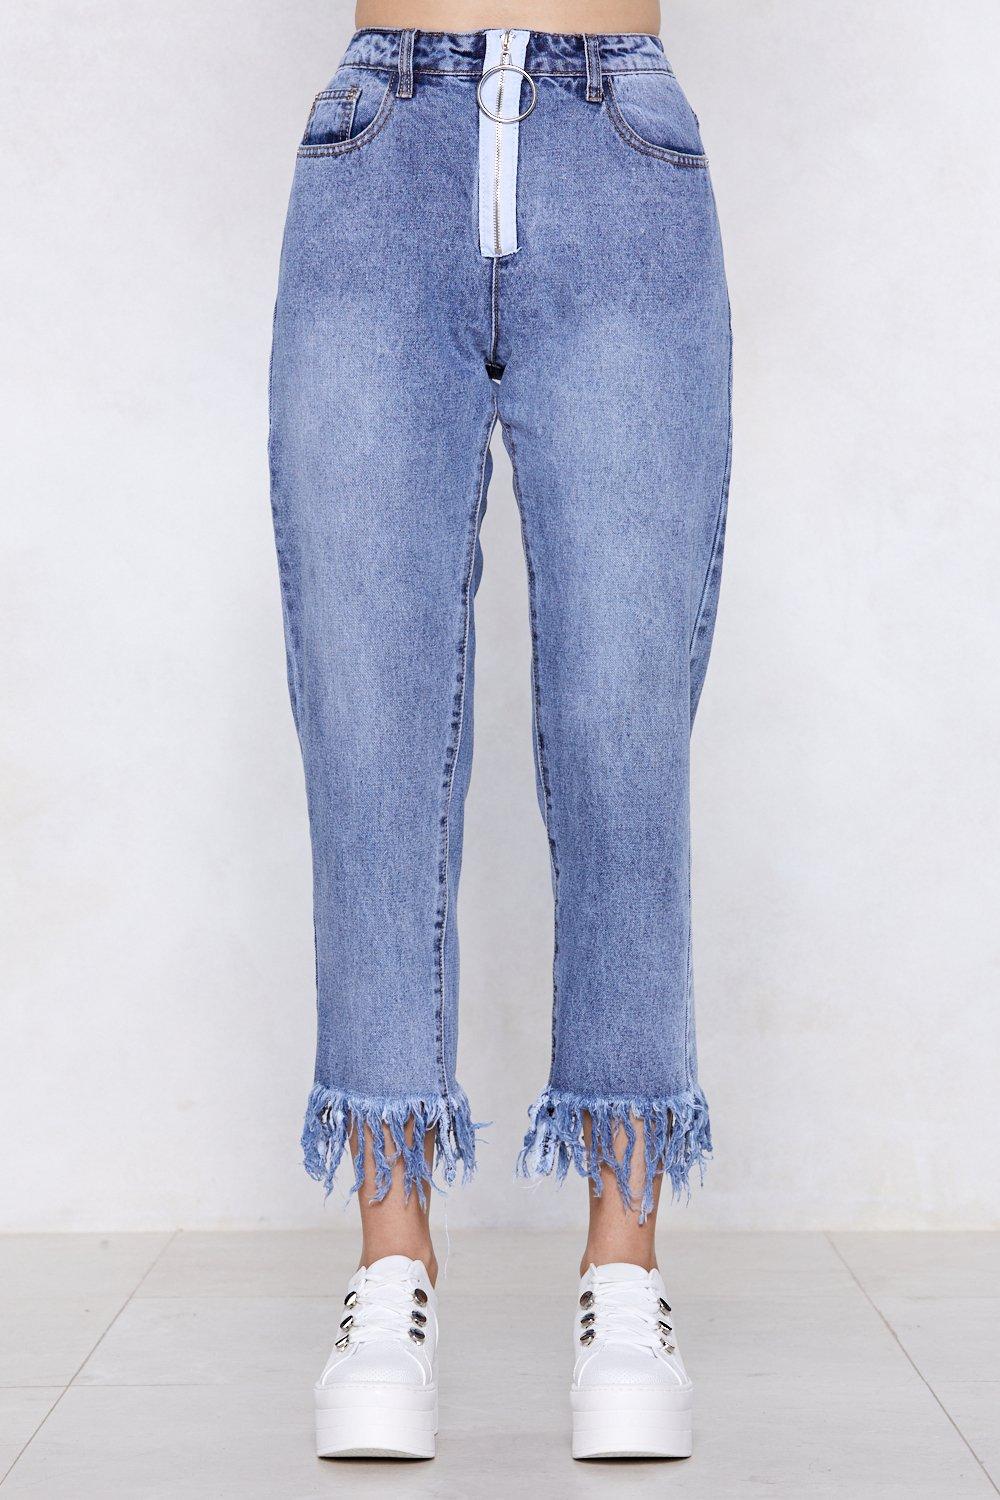 frayed jean bottoms